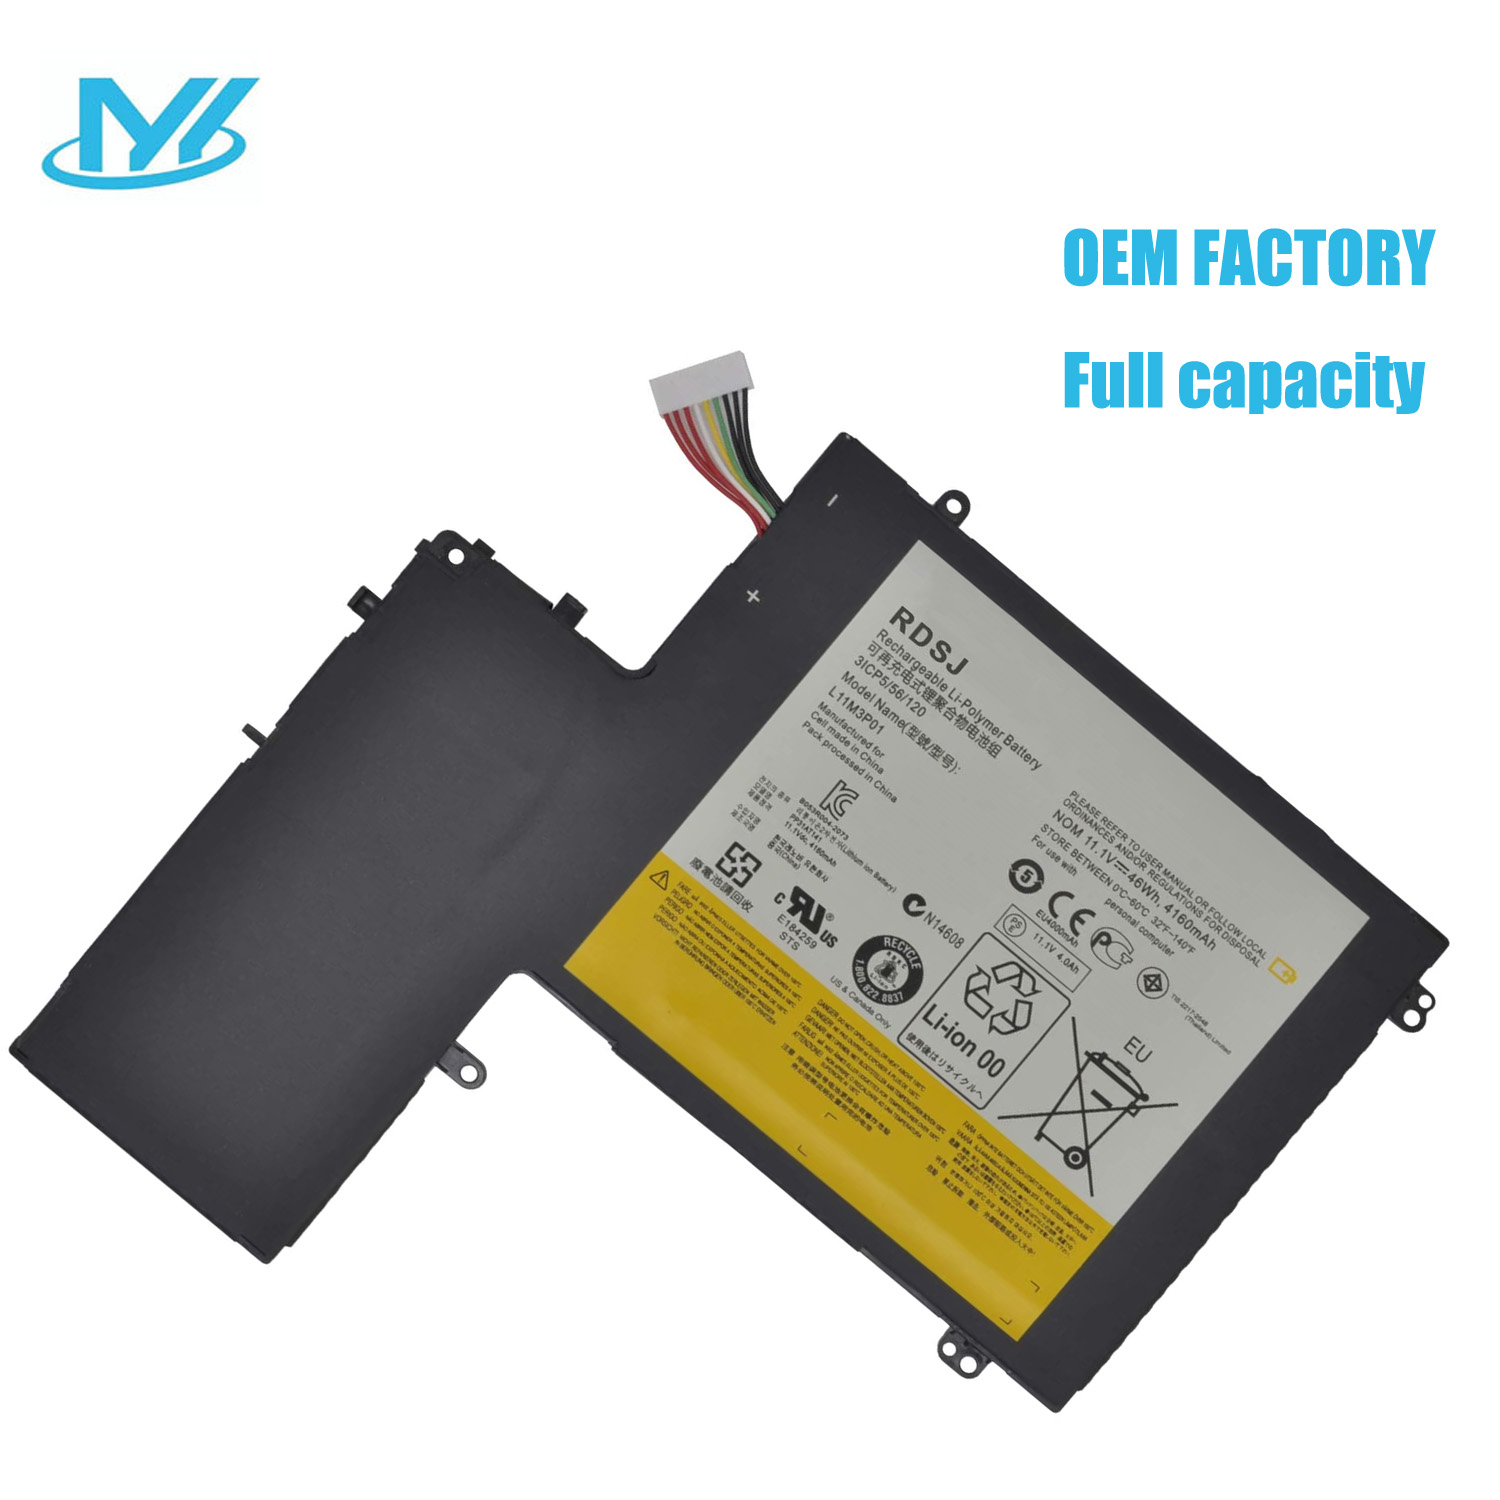 L11M3P01 rechargeable lithium ion Notebook battery Laptop battery For Lenovo IdeaPad U310 4375 43752CU, U310-4375-2YU, U310 43752CU ,U310 43754DJ, U310 43754C 11.1V 46Wh 4160mAh